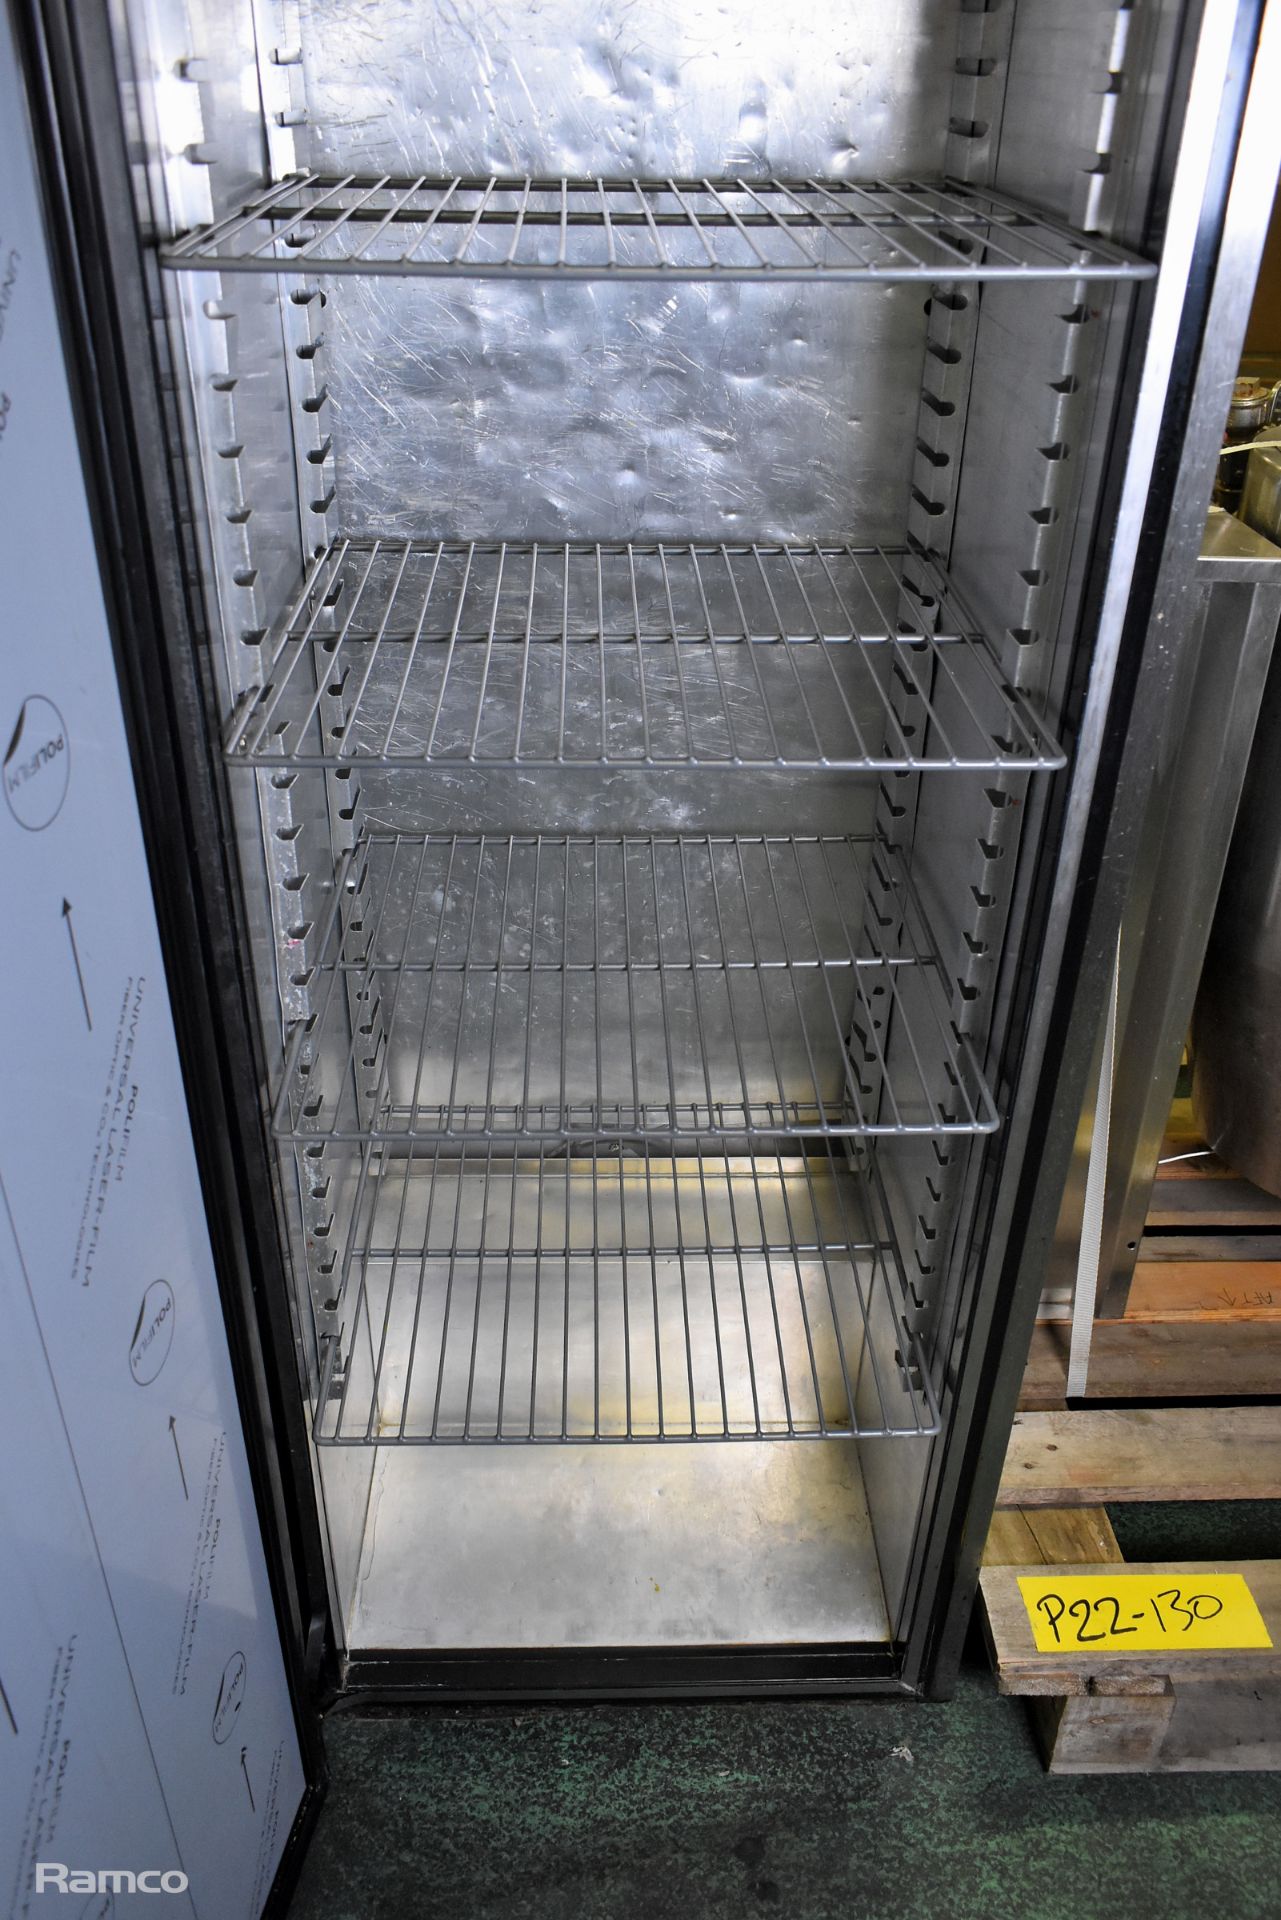 Foster HR410 stainless steel single door upright fridge - W 600 x D 660 x H 1860mm - Image 2 of 6